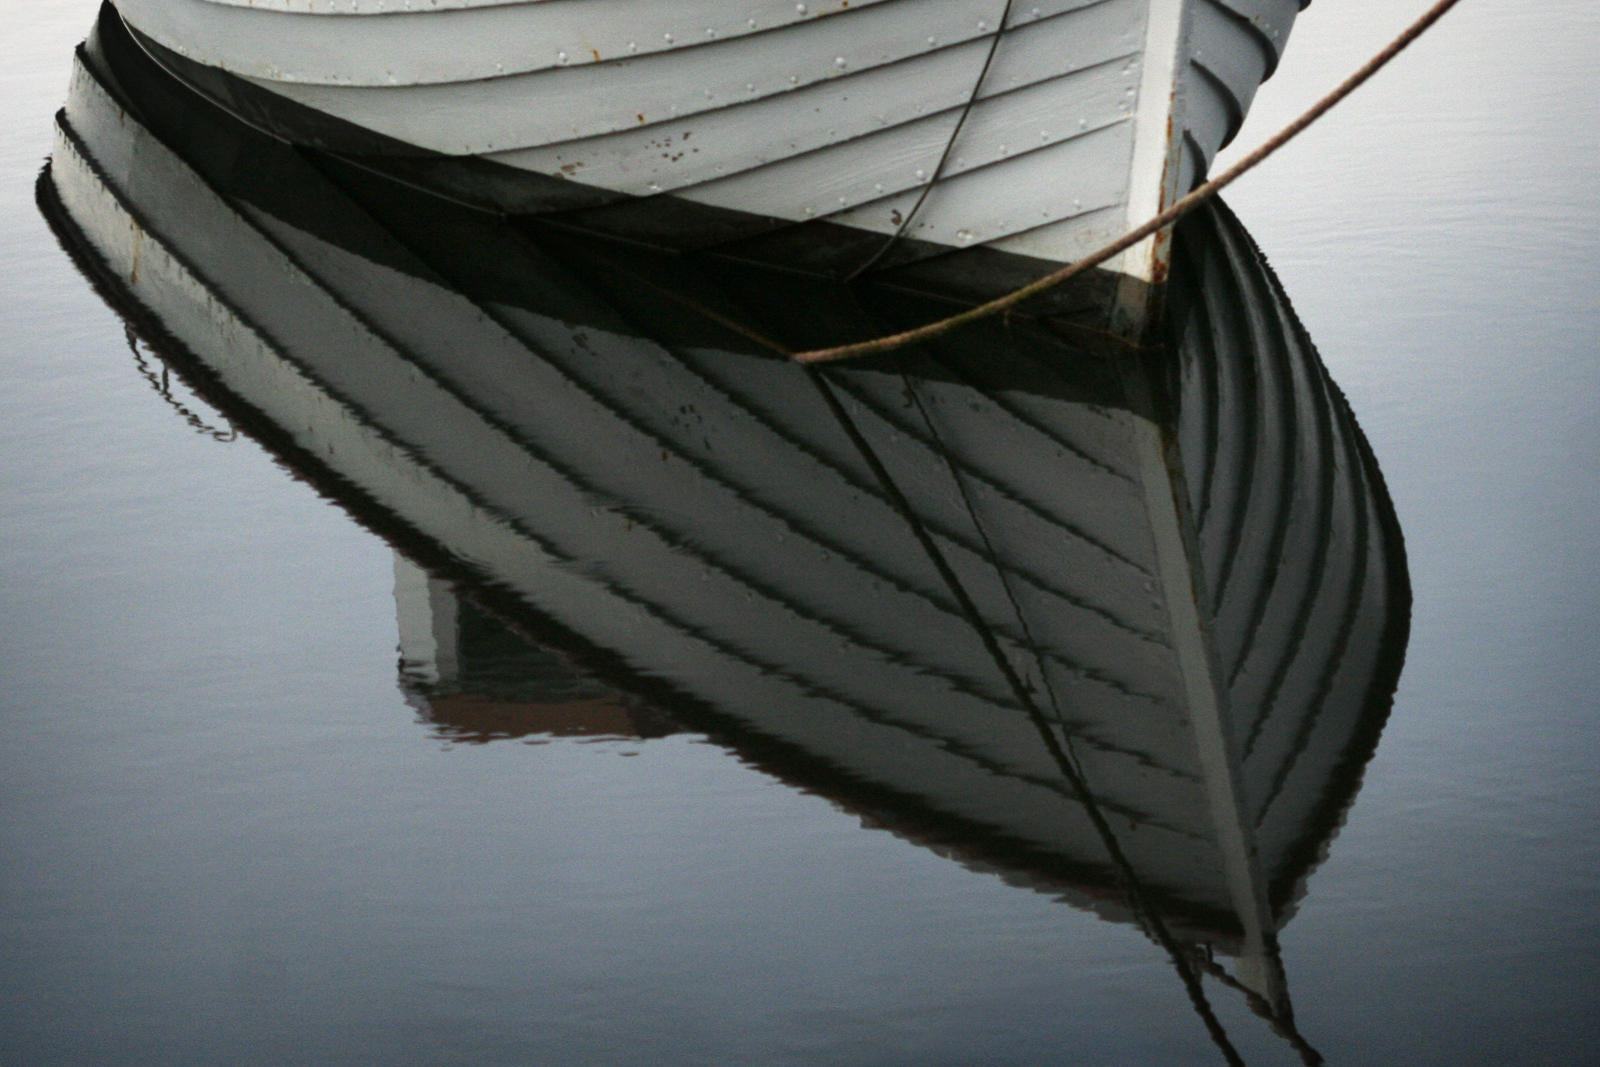 Reflection-boat